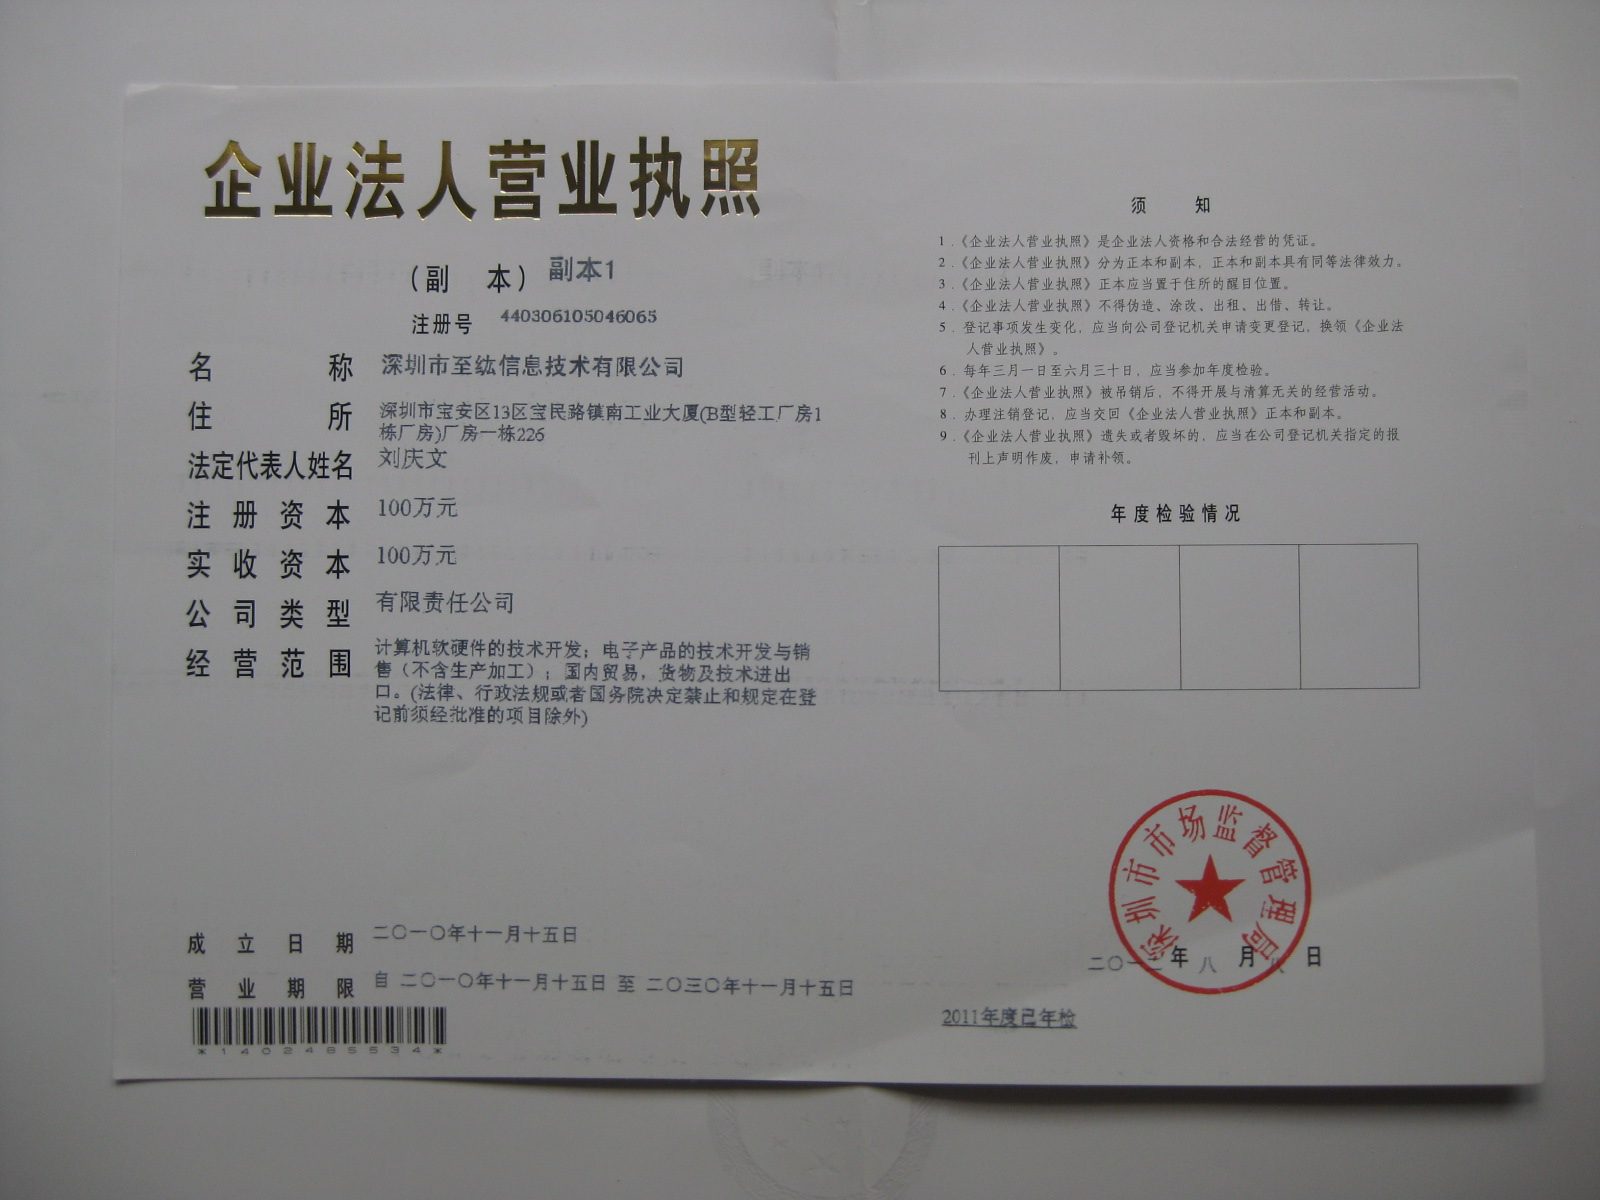 SHENZHEN ZHIHONG COMPANY License